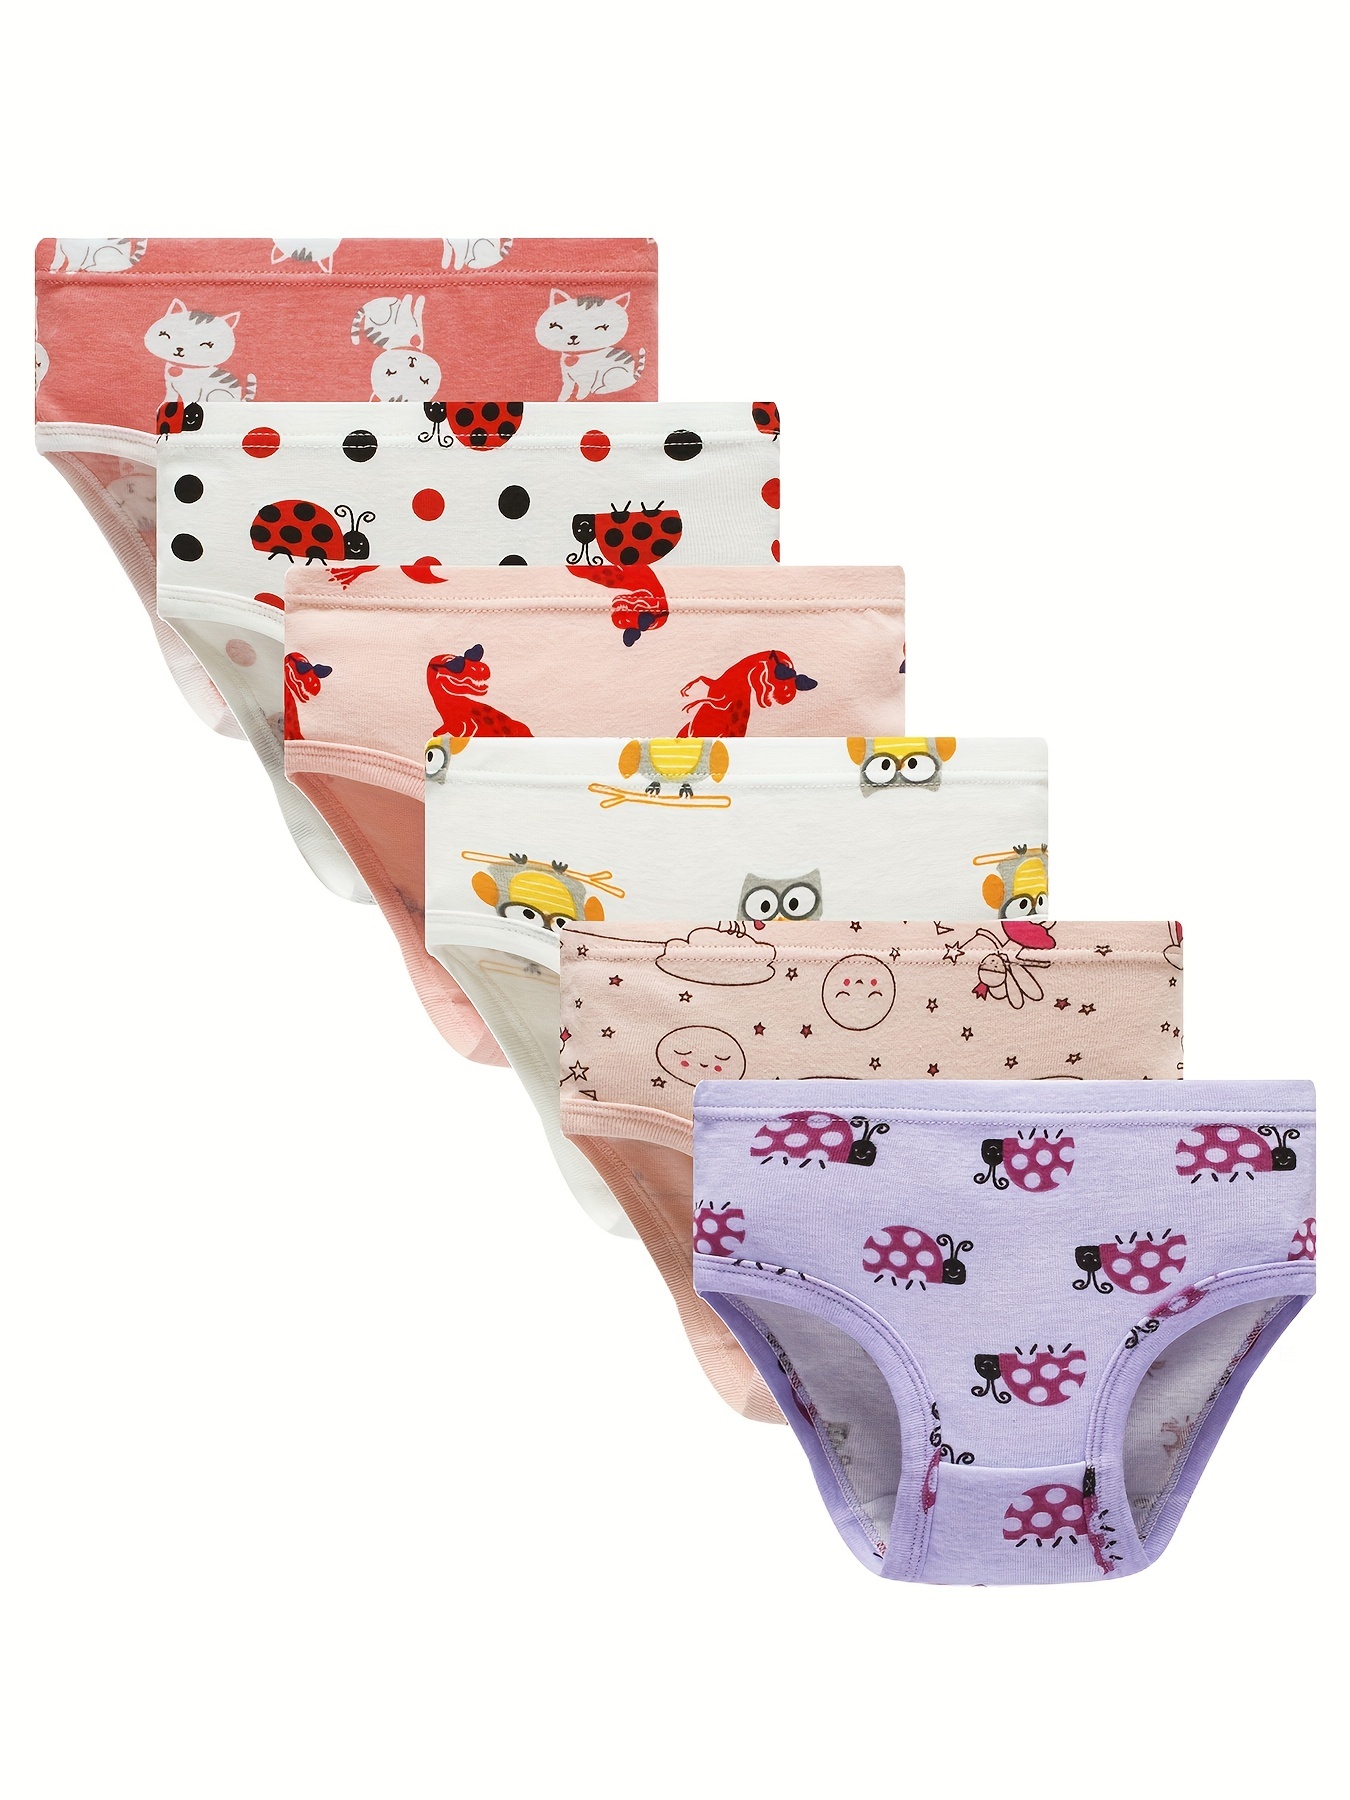  Toddler Girls Underwear Unicorn Mermaid Panties Soft Cotton  Briefs 2t Multicolored